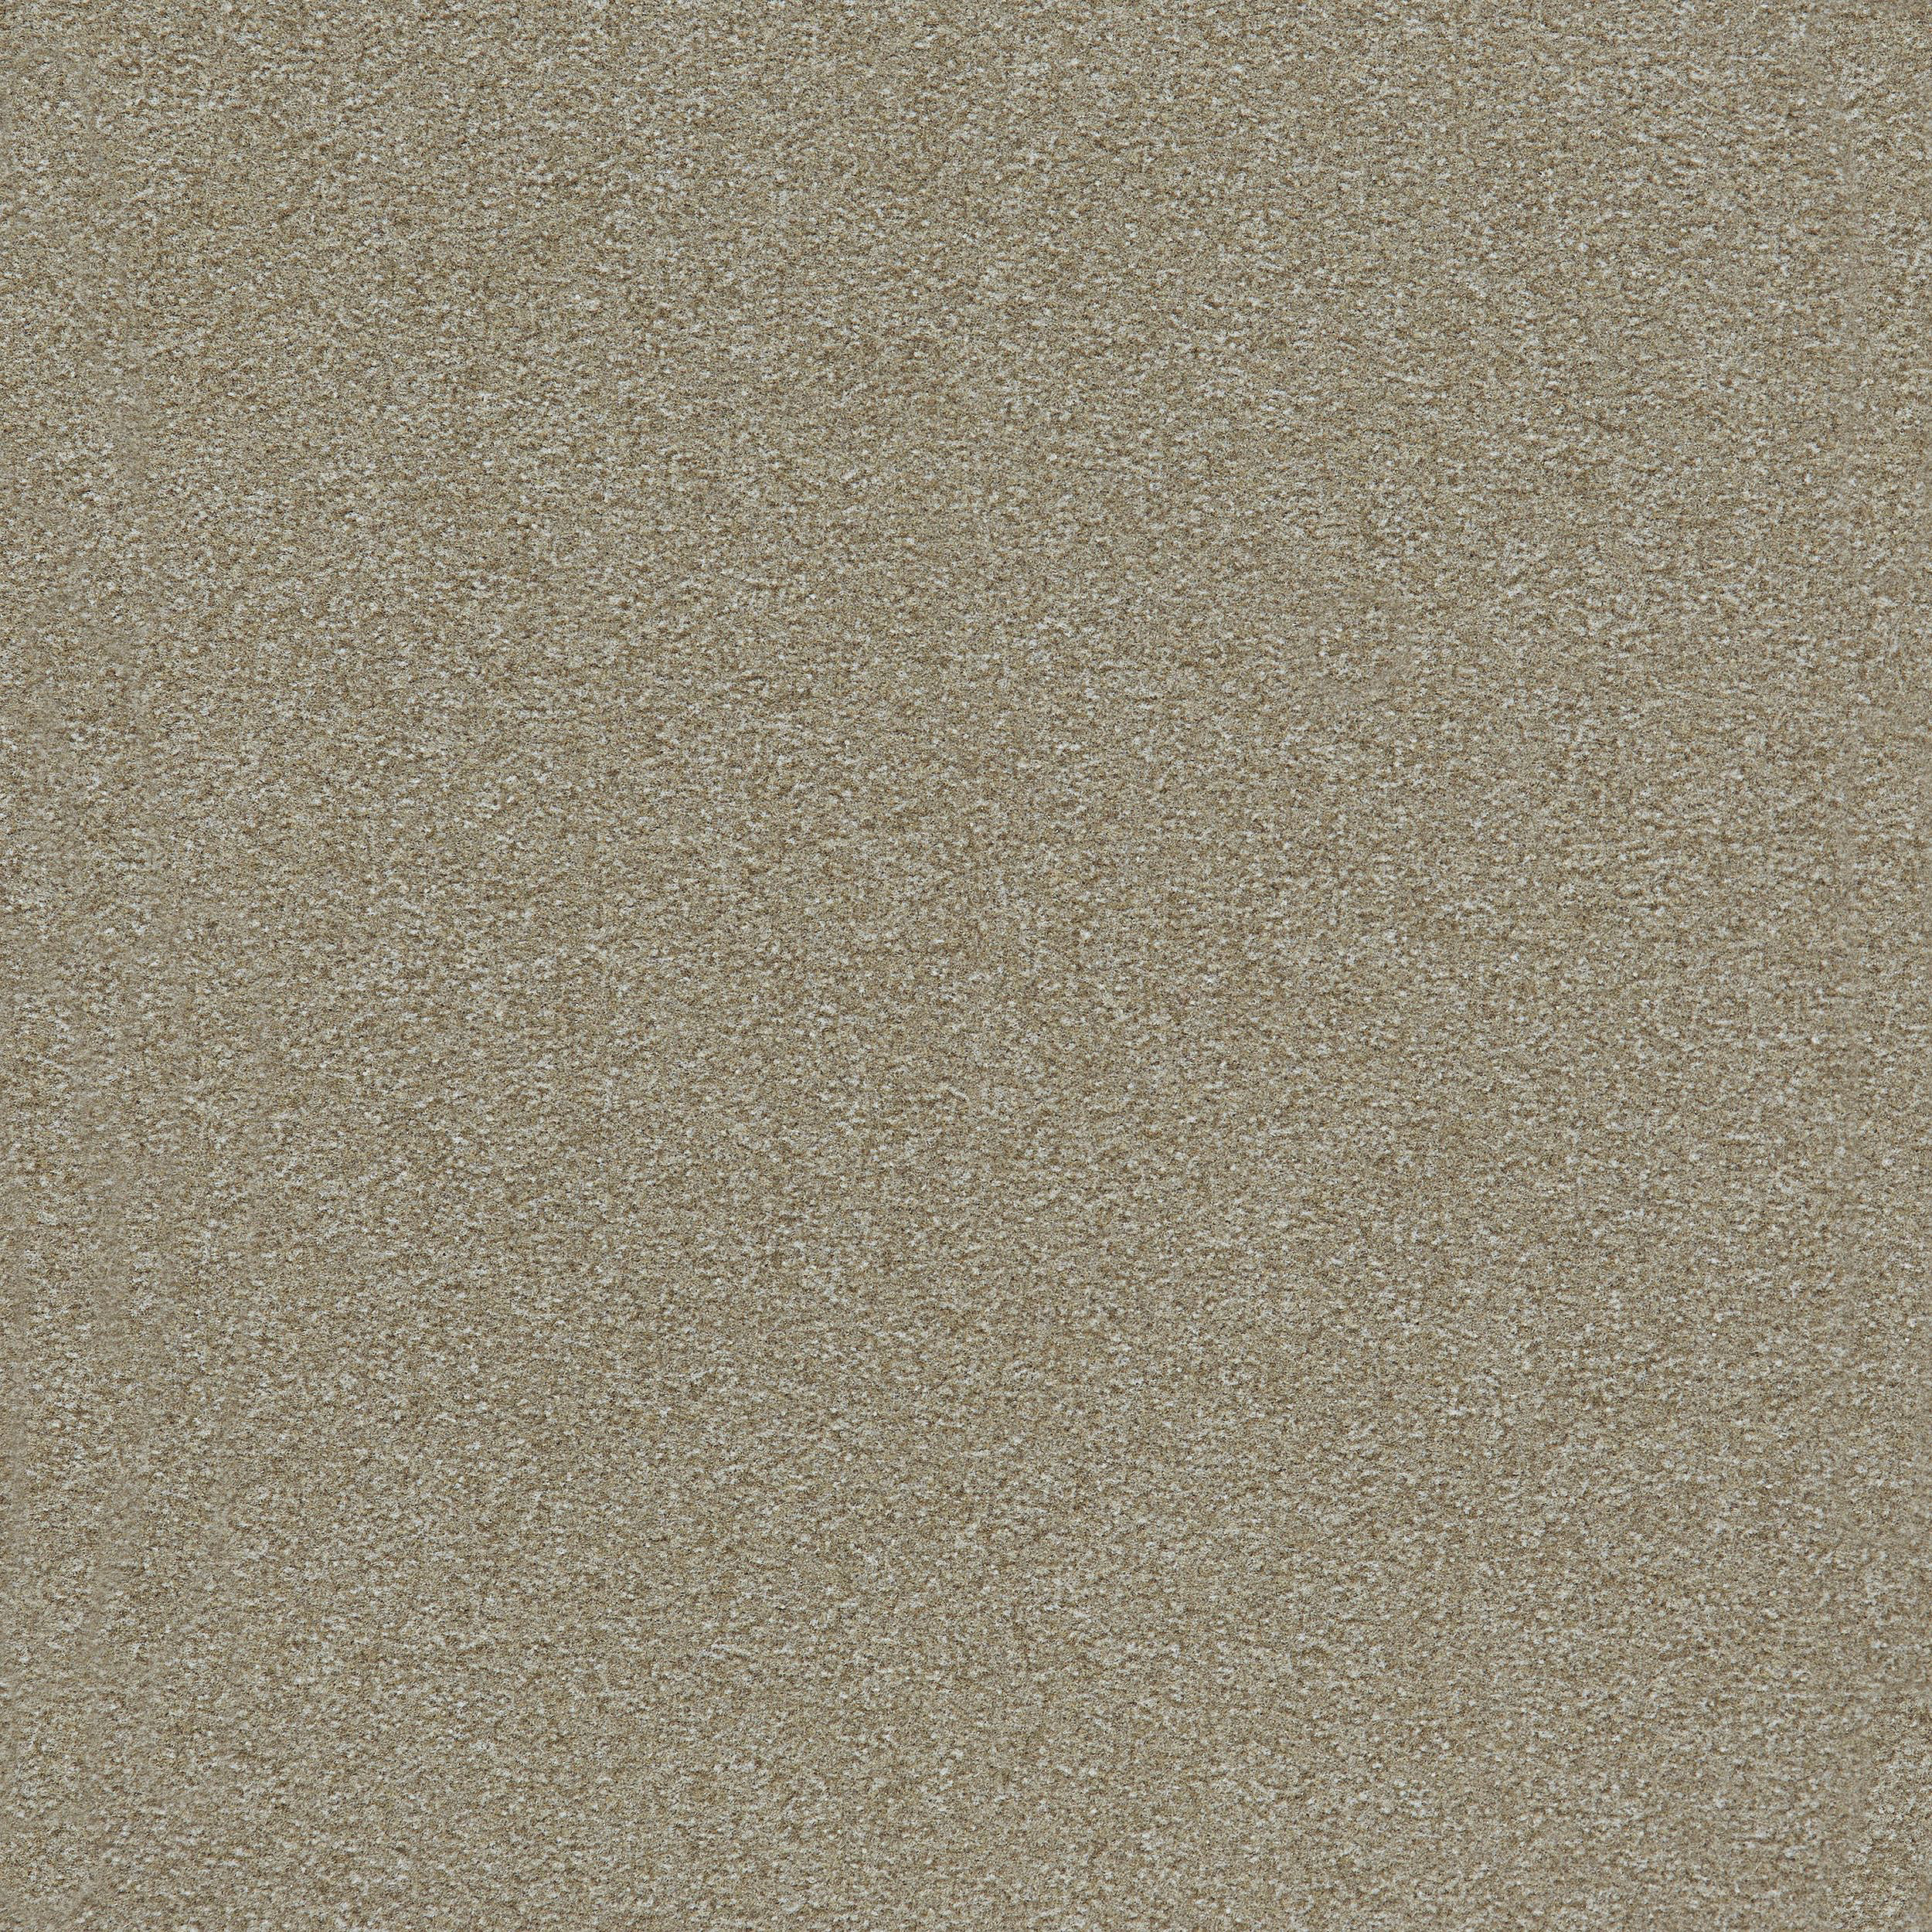 Heuga 725 Carpet Tile In Oyster afbeeldingnummer 9